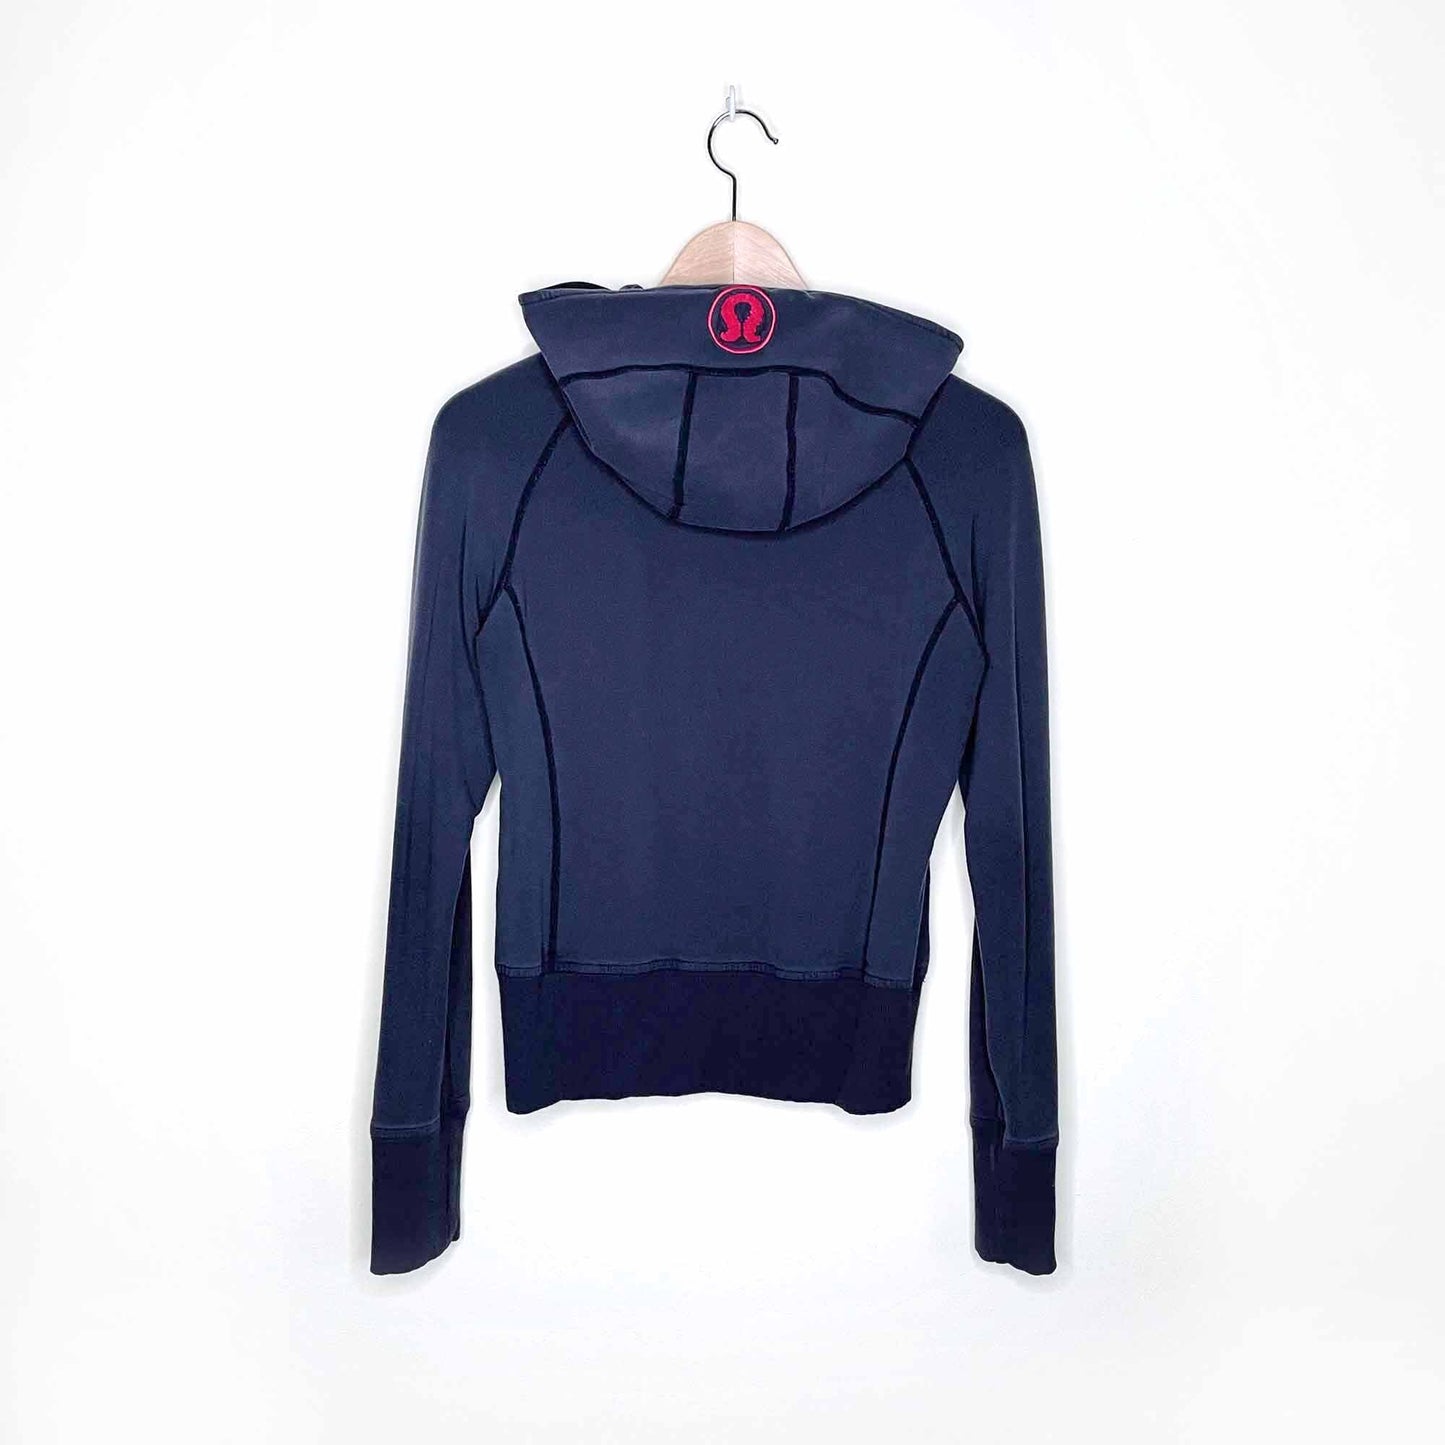 lululemon stretch zip up hooded sweatshirt - size 4